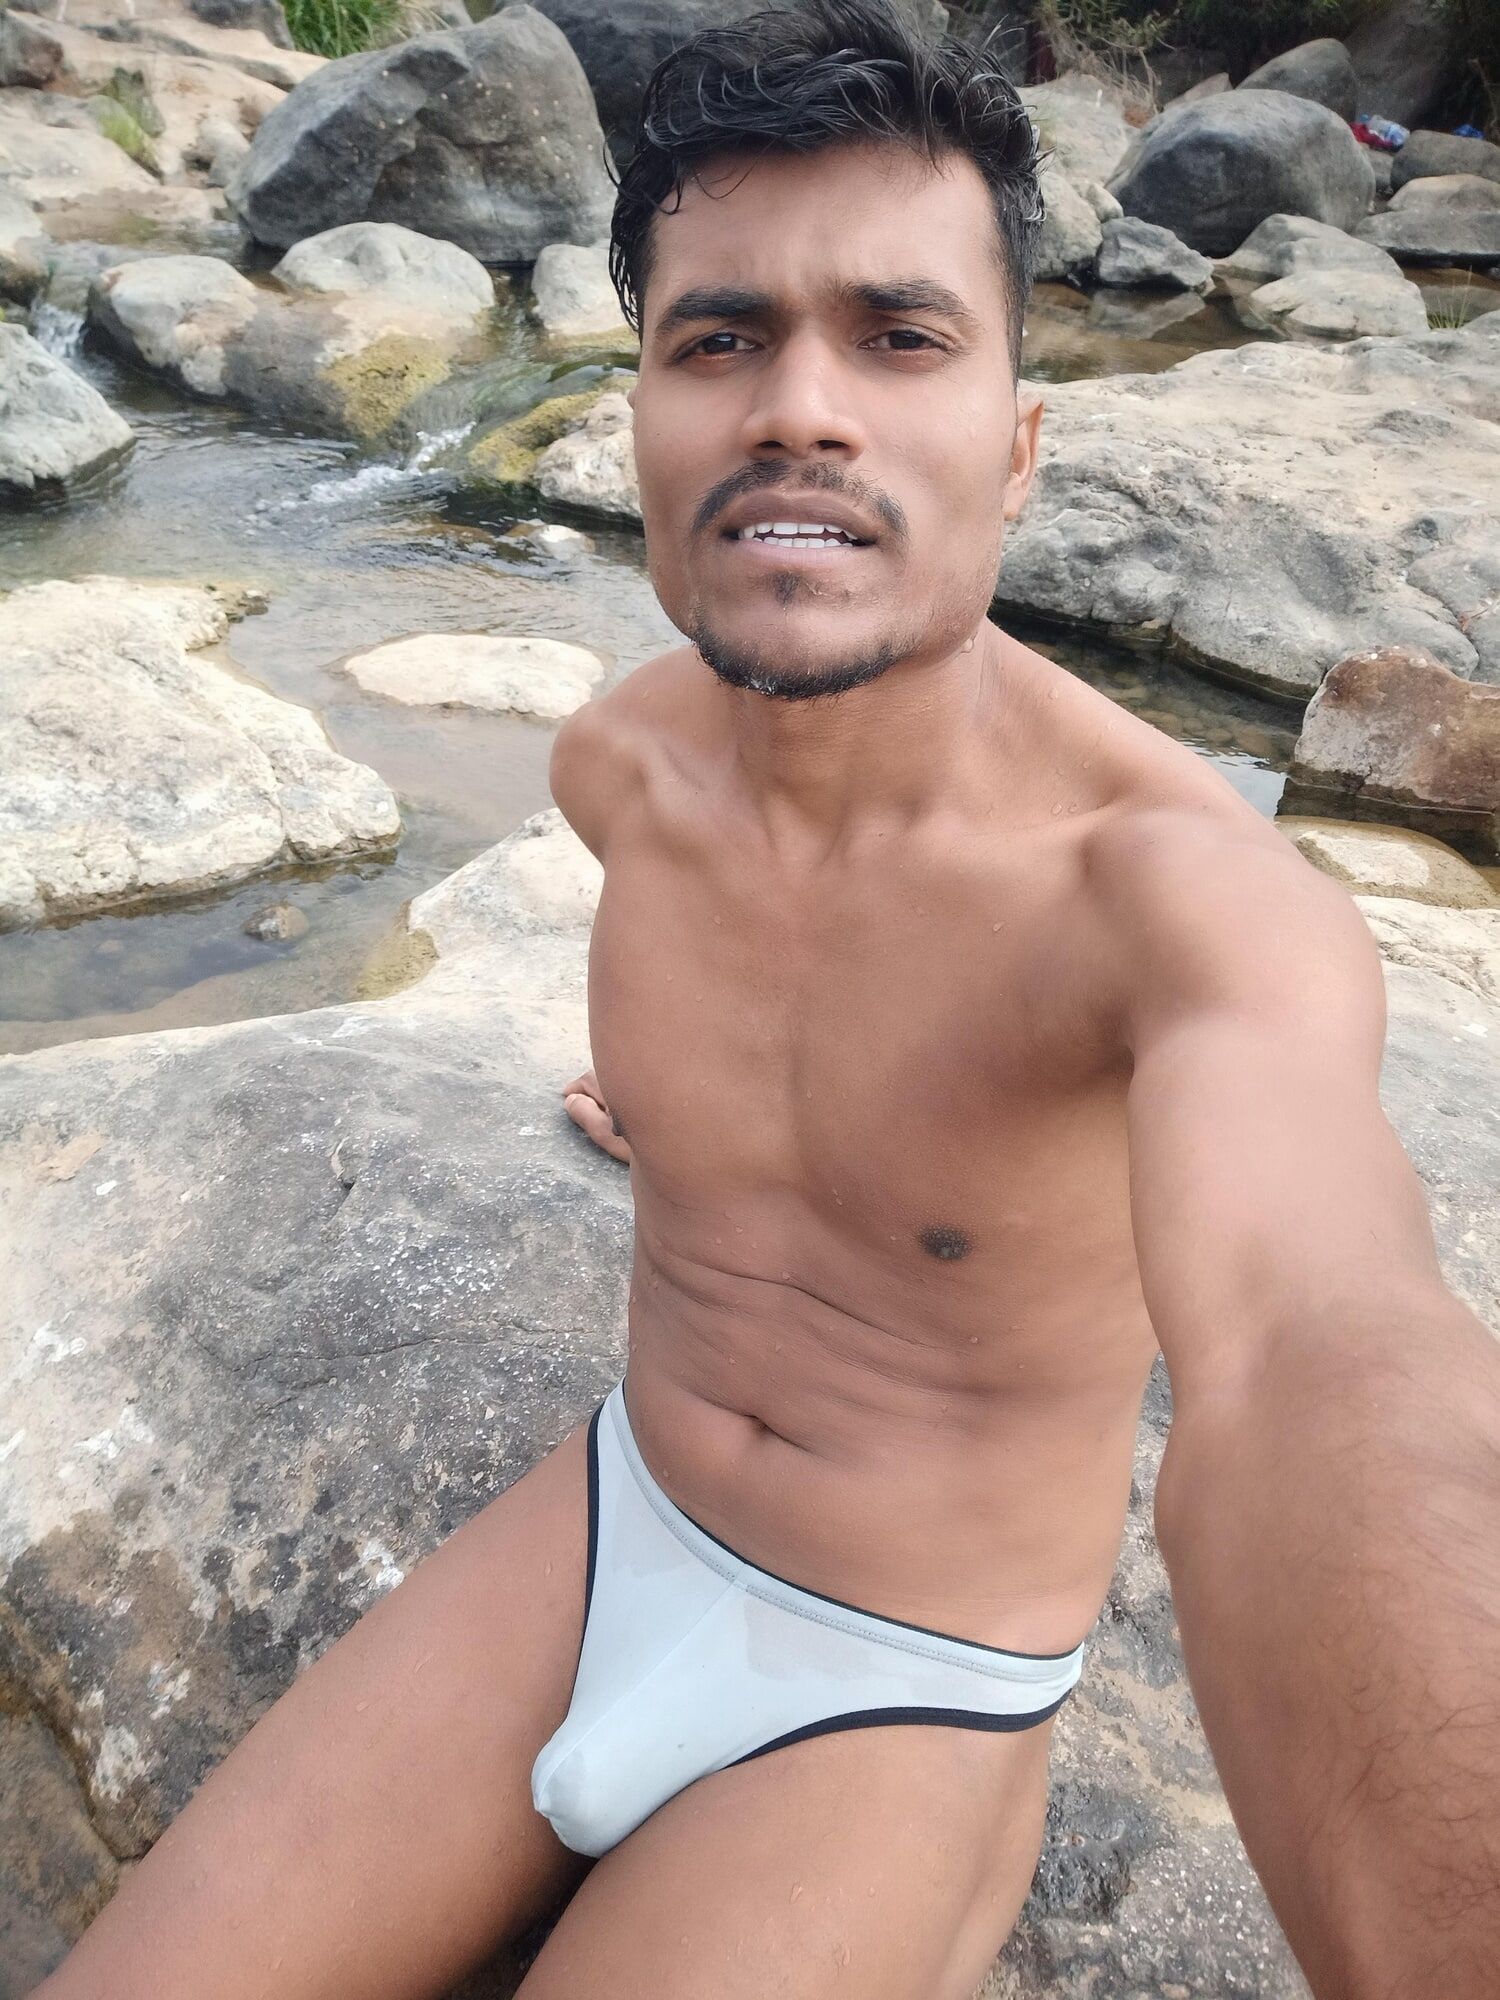 Hot muscular gym boy outdoor in river bathing enjoying swimm #12